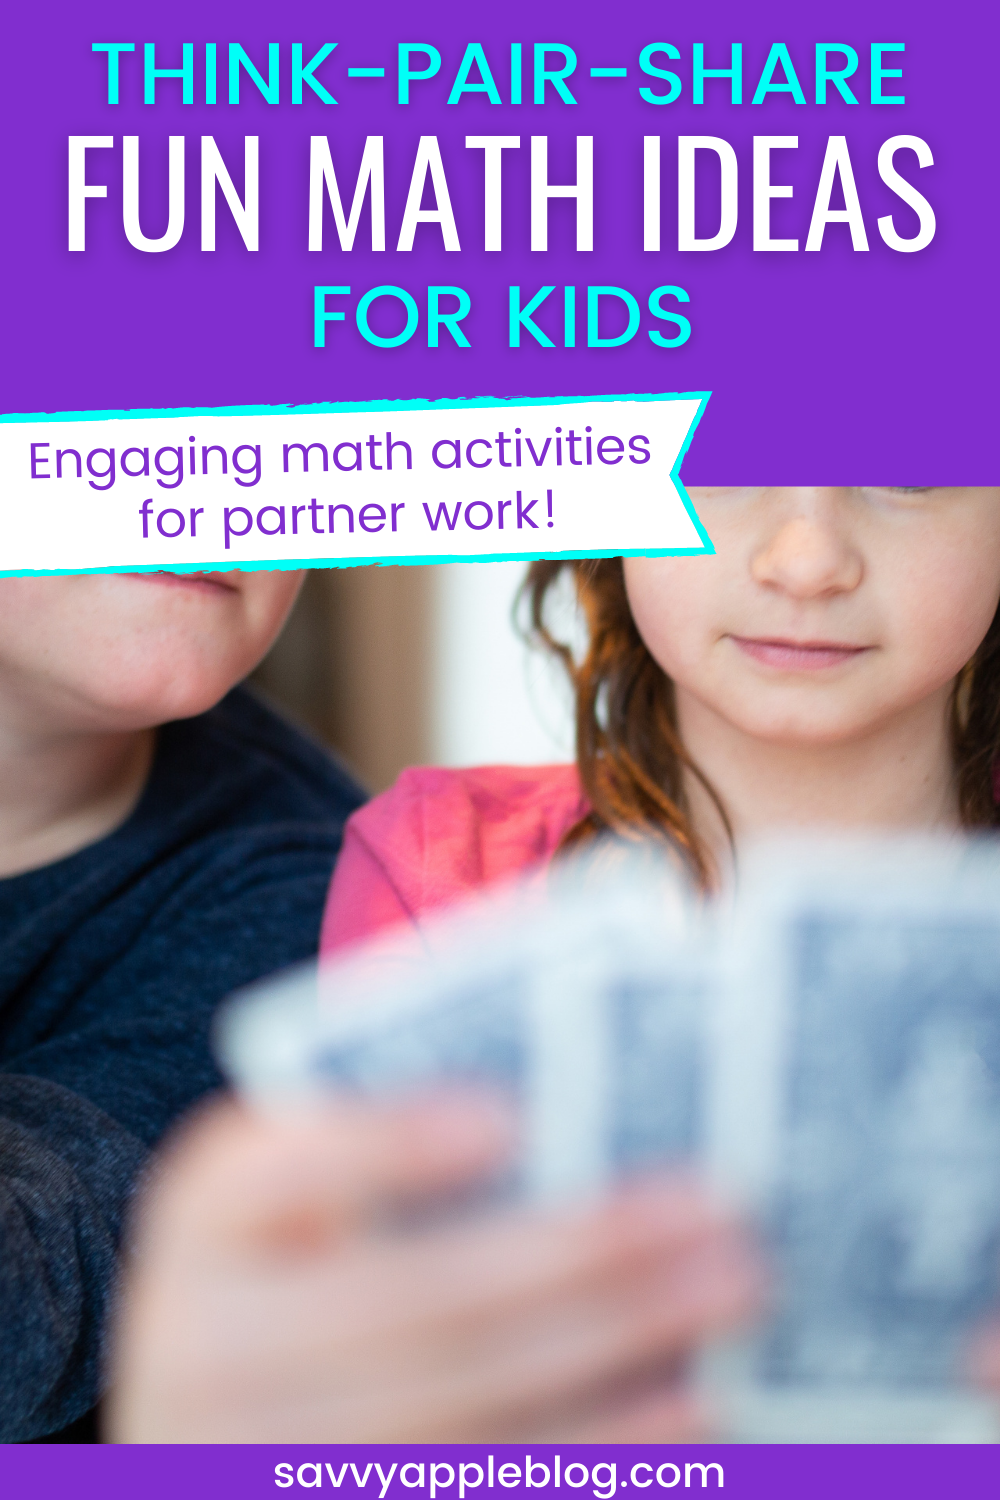 Fun Math Games for Kids – Savvy Apple